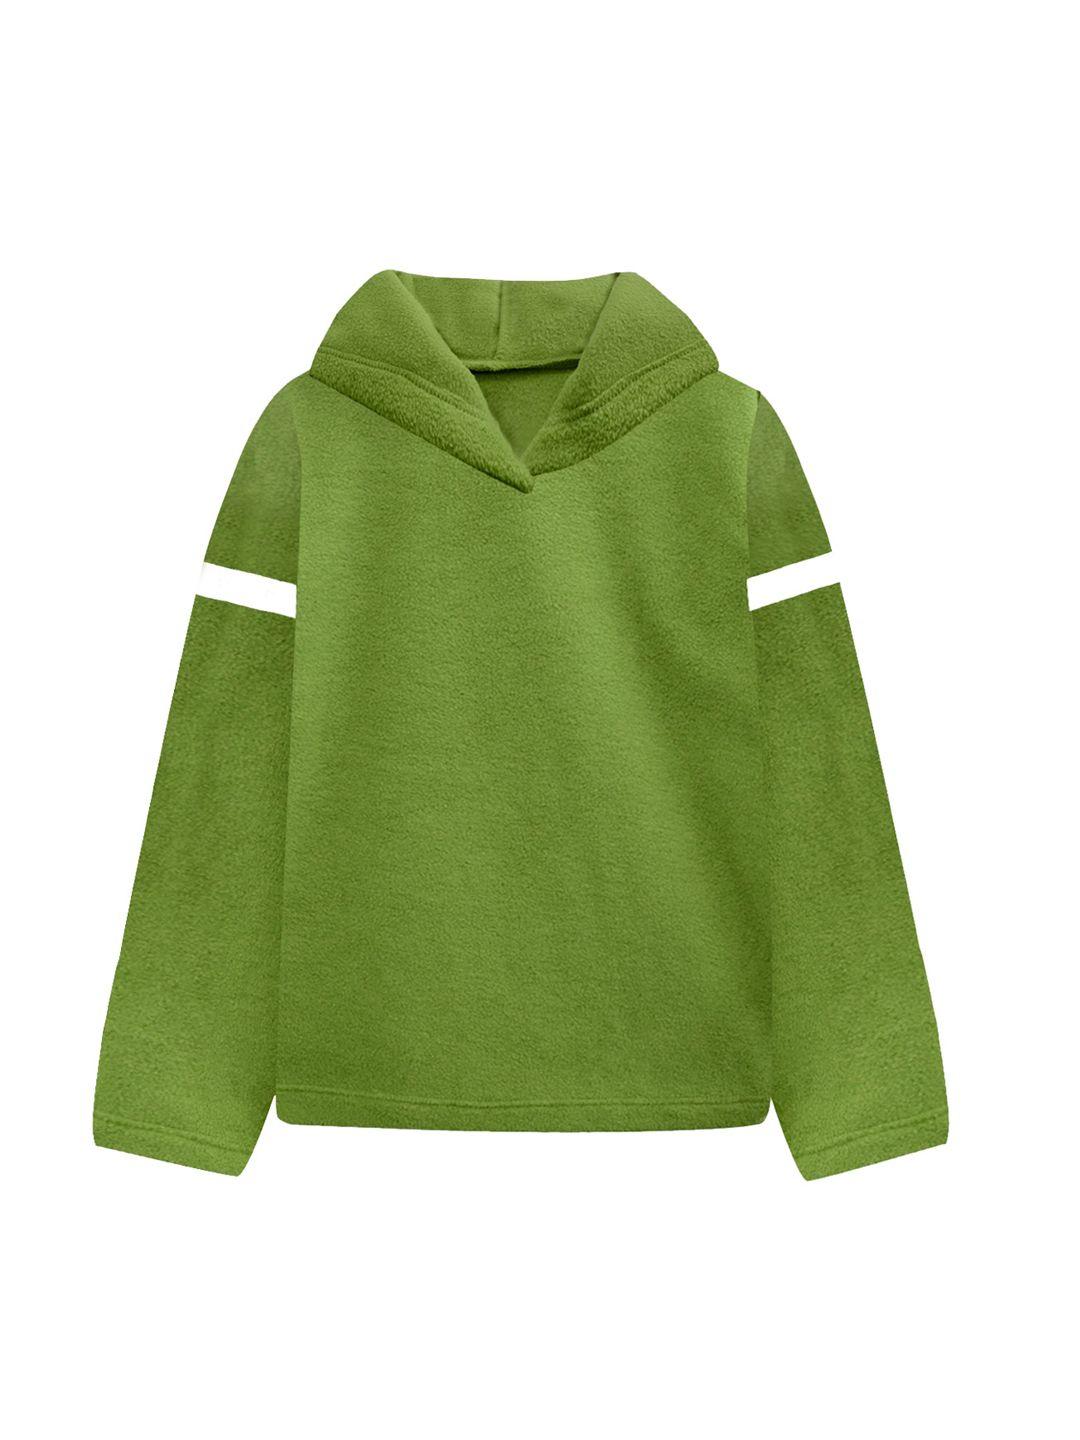 a.t.u.n. women olive green hooded sweatshirt